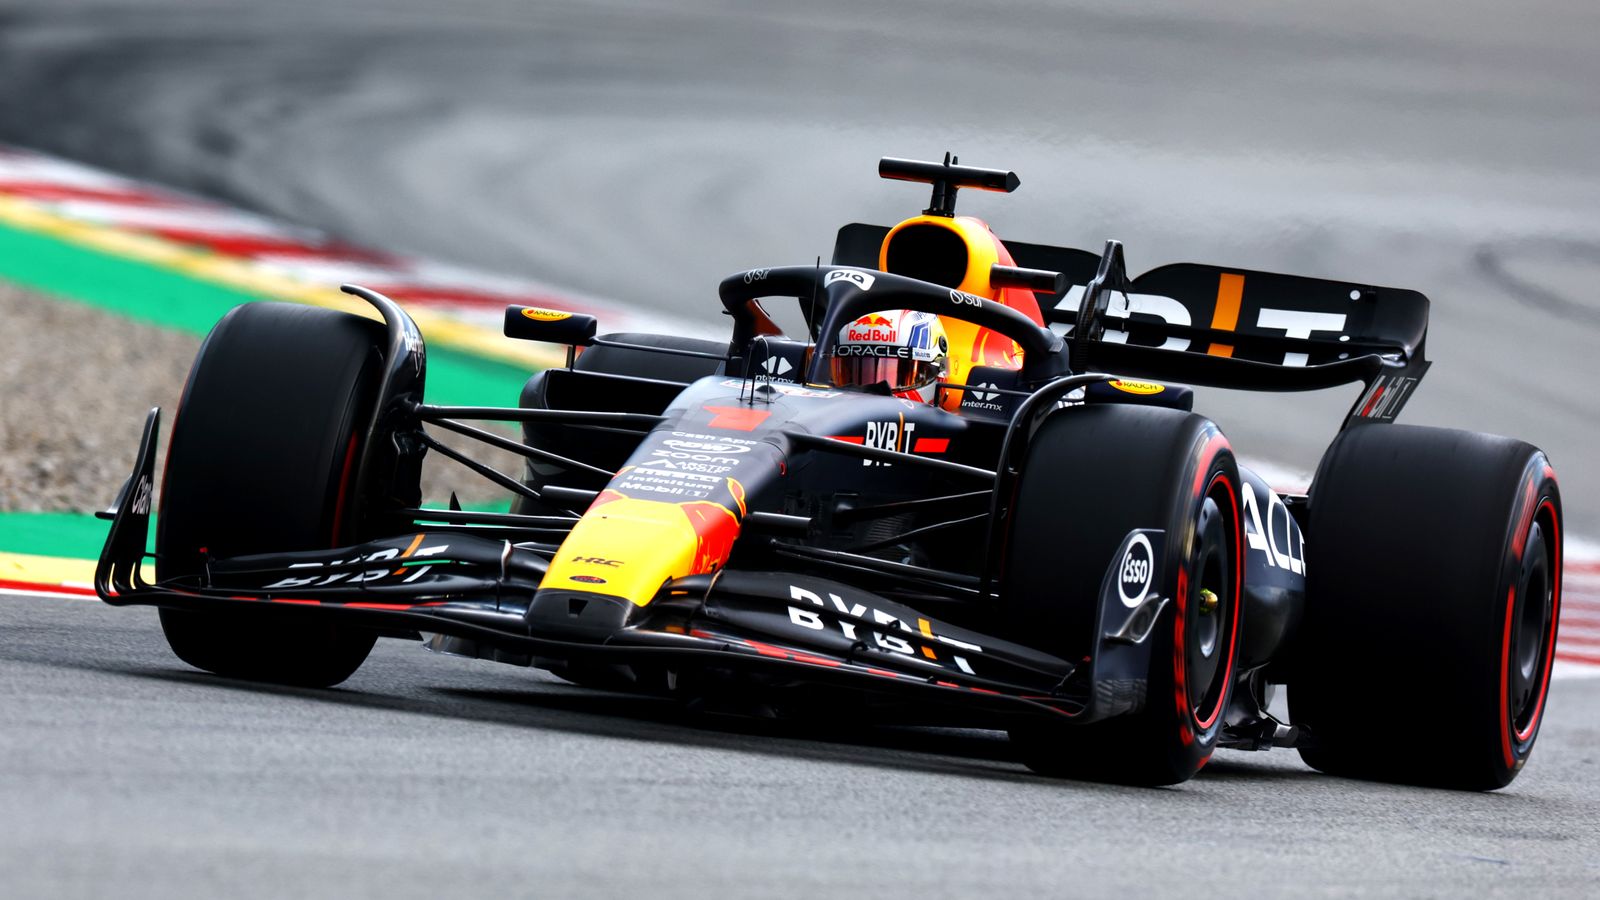 Spanish GP: Max Verstappen tops last apply as Lewis Hamilton improves forward of Qualifying